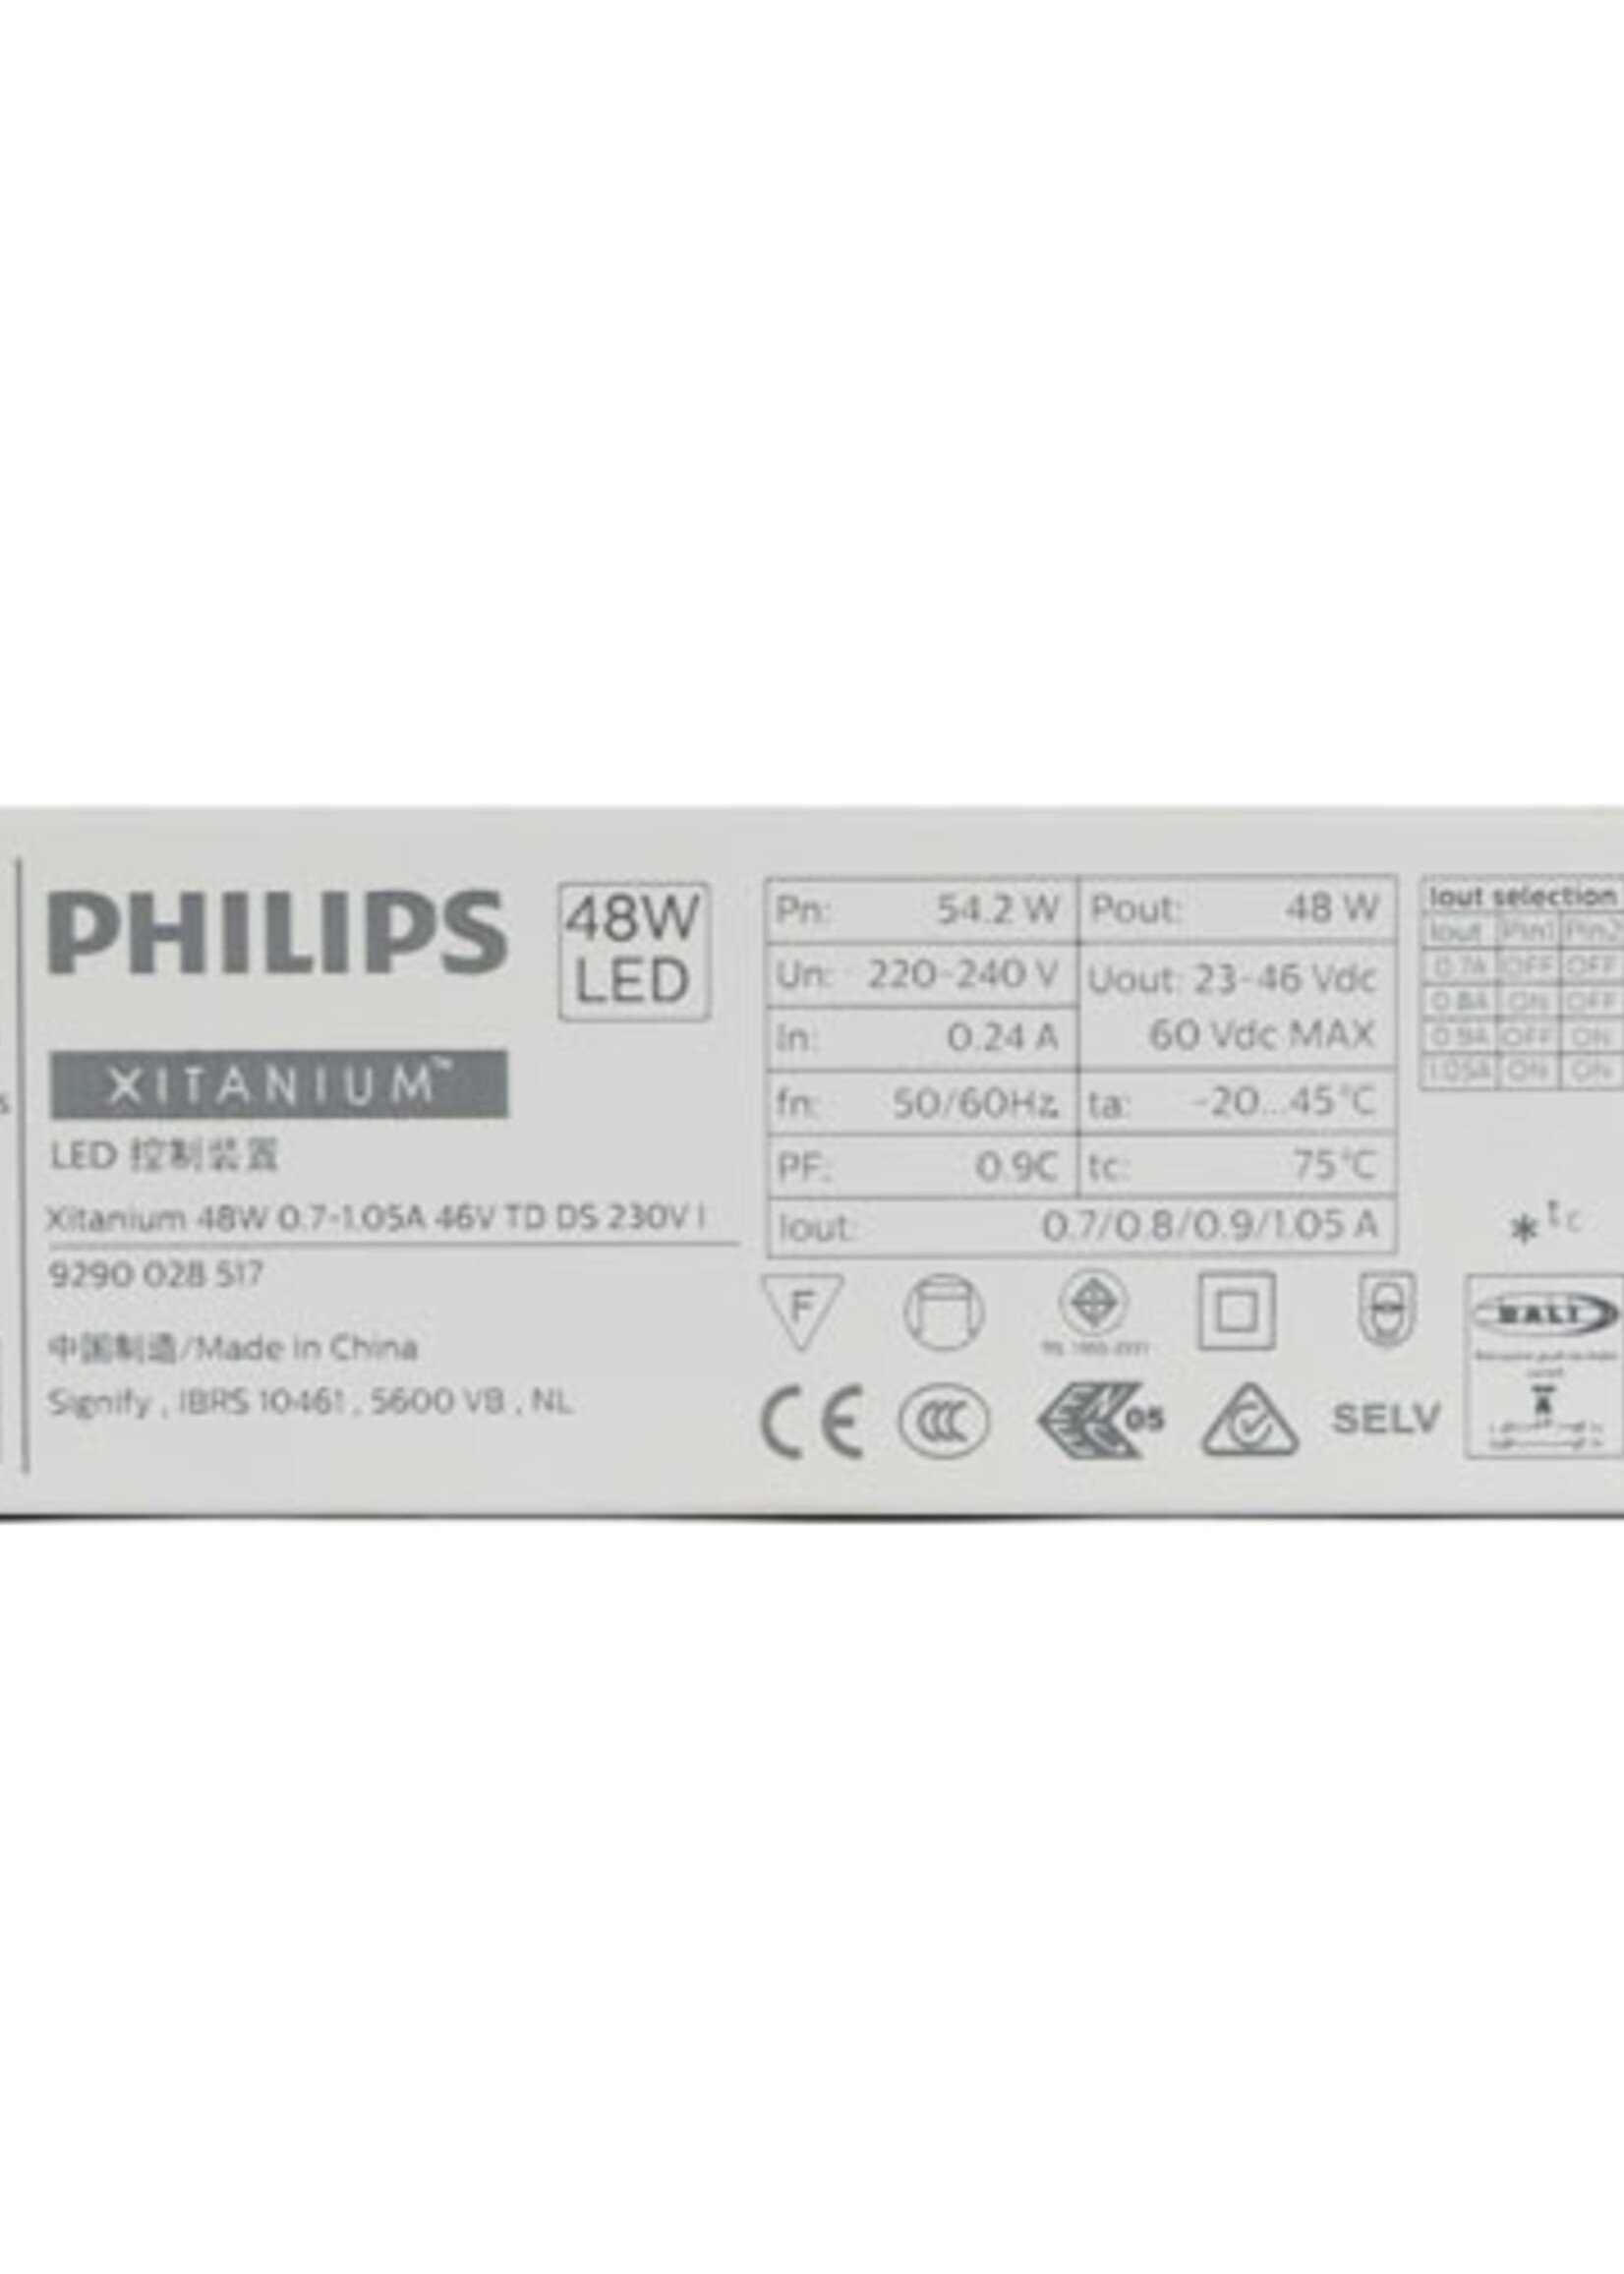 Philips Xitanium LED Driver Philips Xitanium LED Driver 44W Dali dimmable flicker-free Alternating Output Current: 700mA/800mA/900mA/1050mA